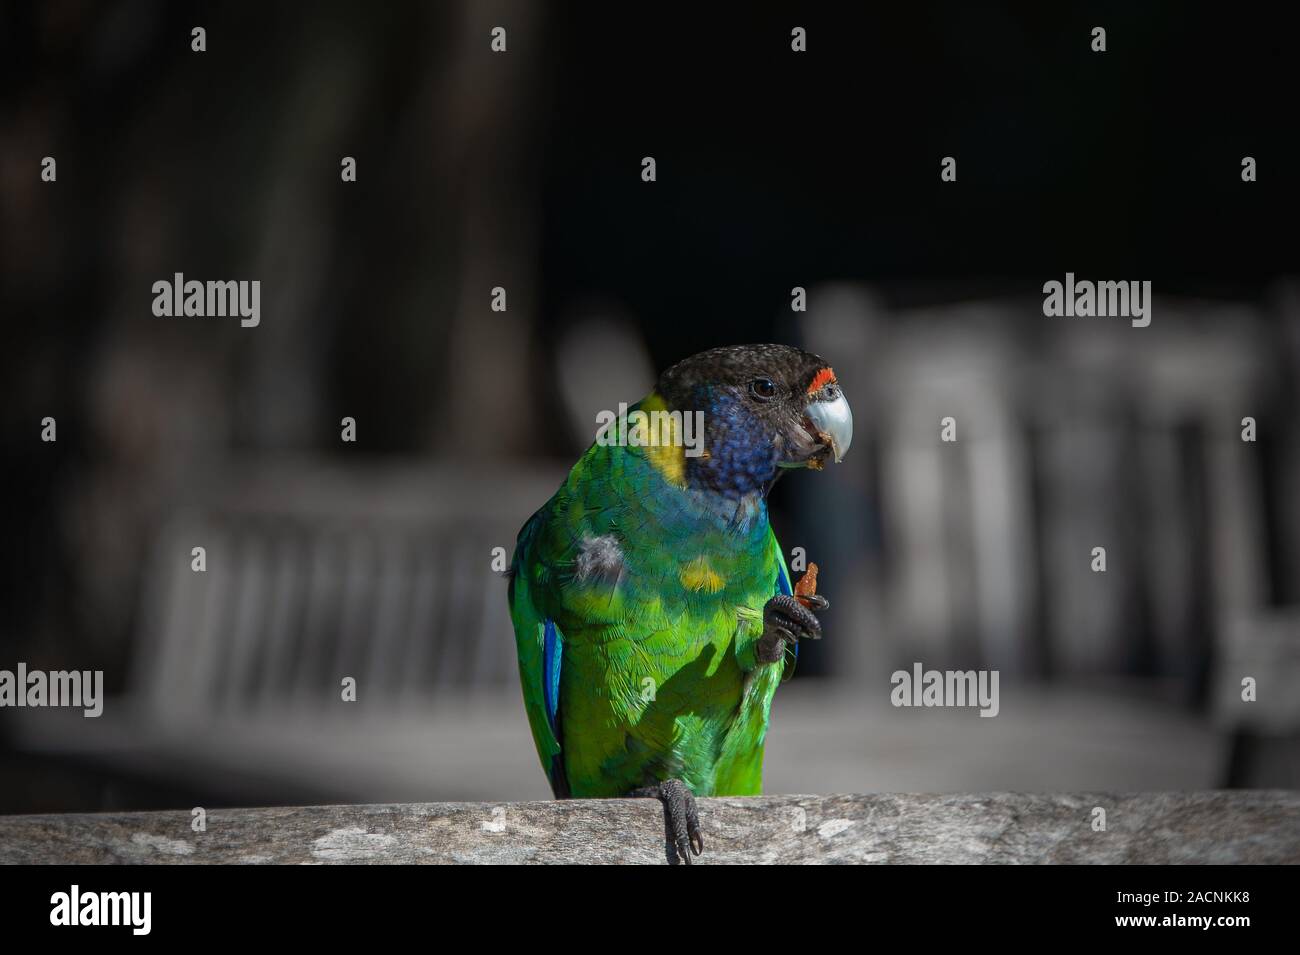 Australian Ringneck Parrot (Barnardius zonarius) against a dark background Stock Photo